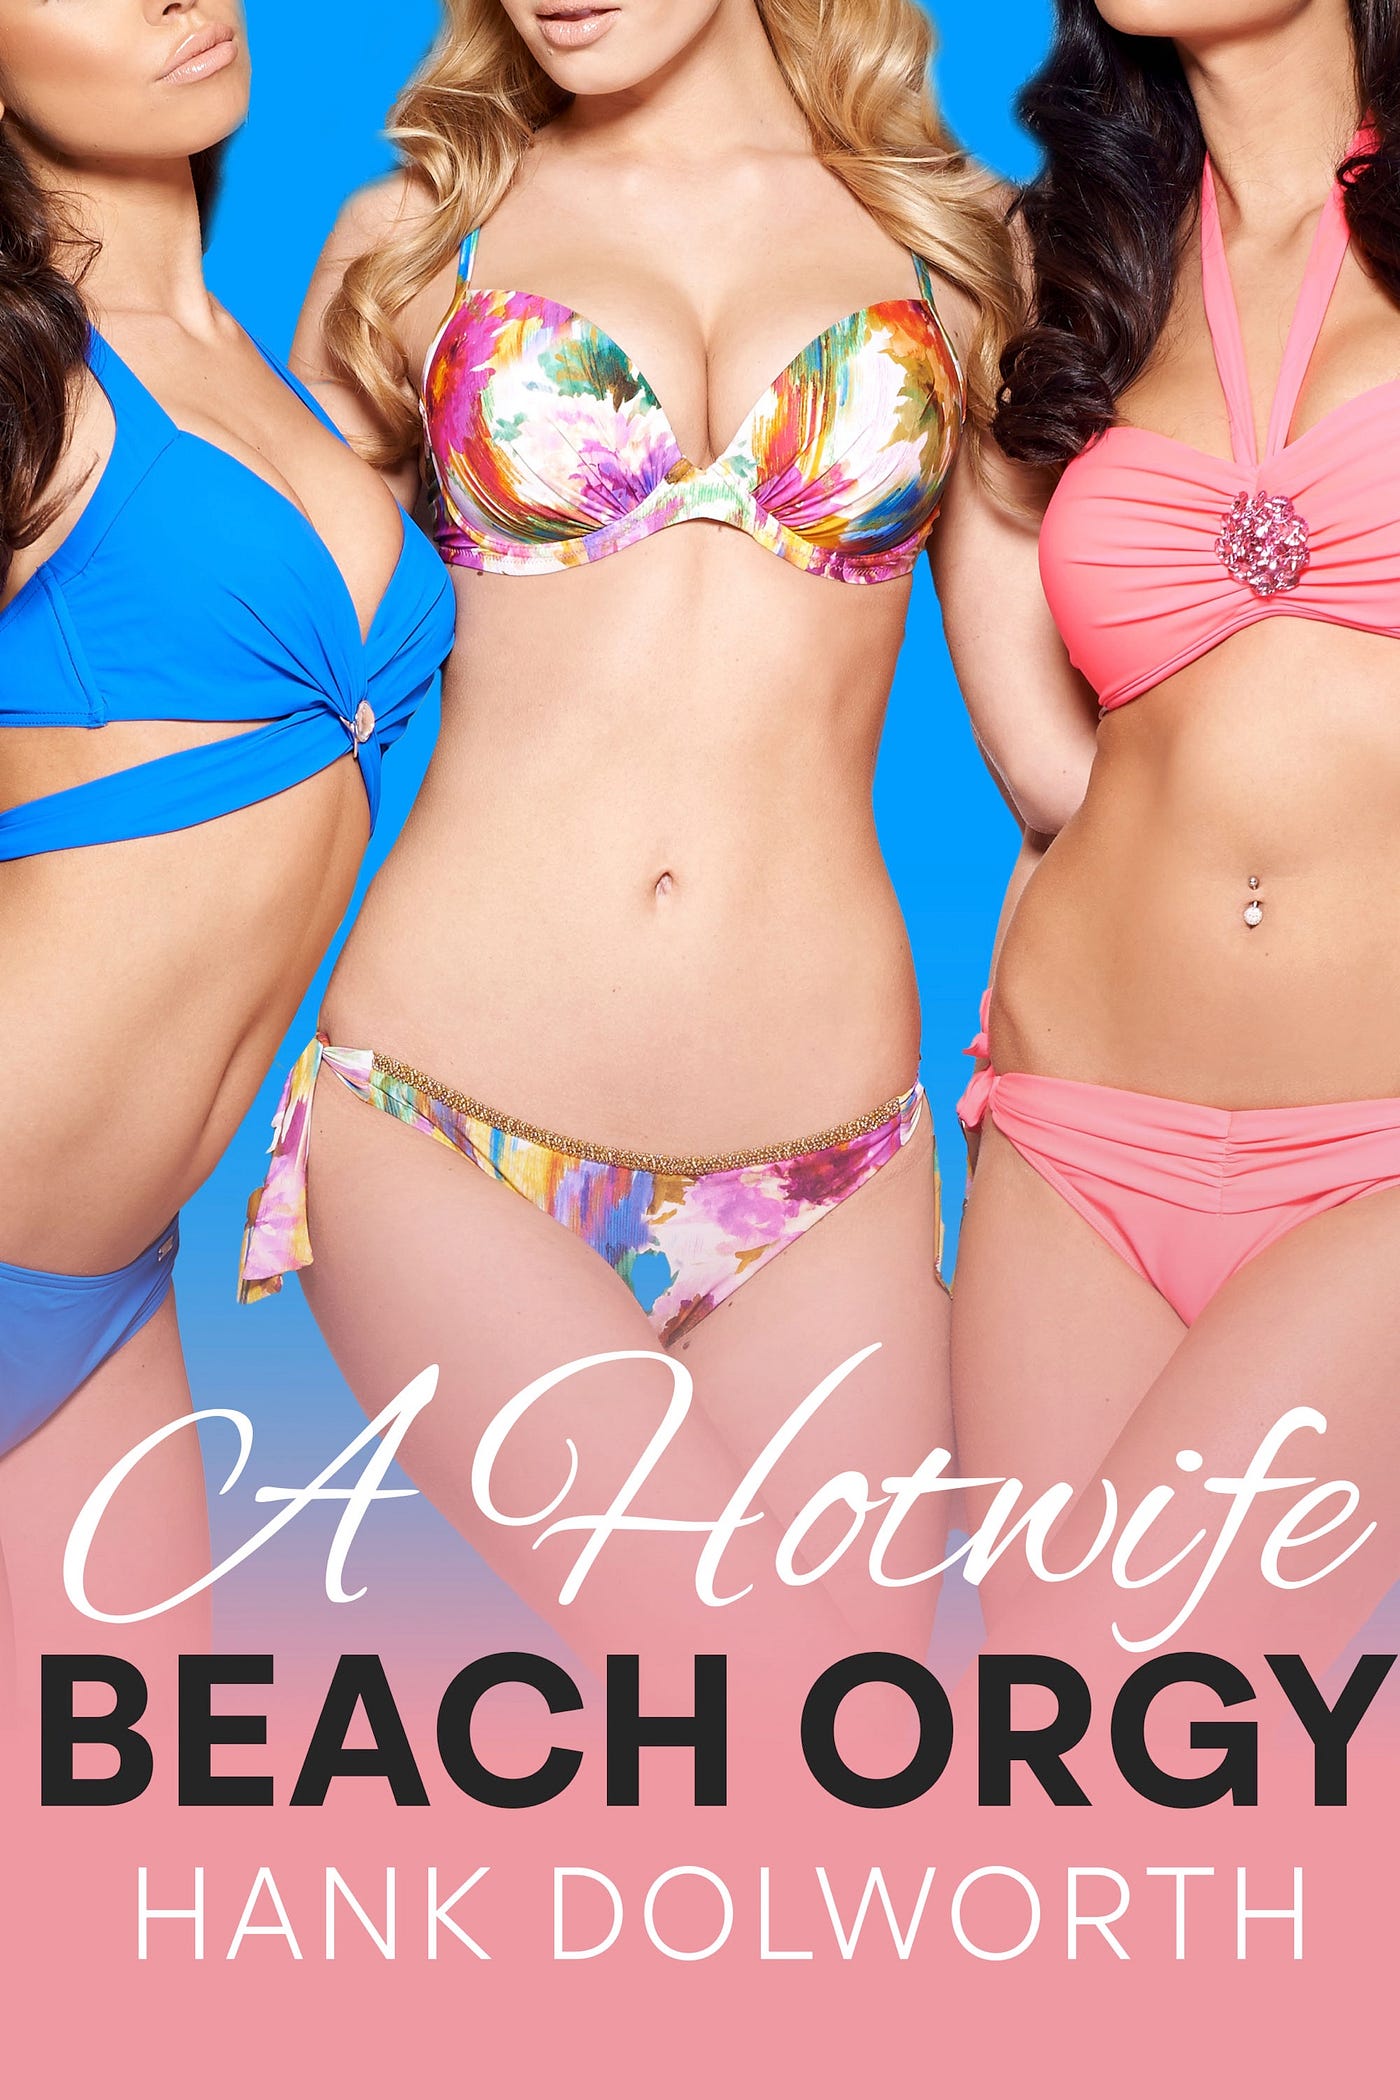 A Hotwife Beach Orgy (Christi) image photo